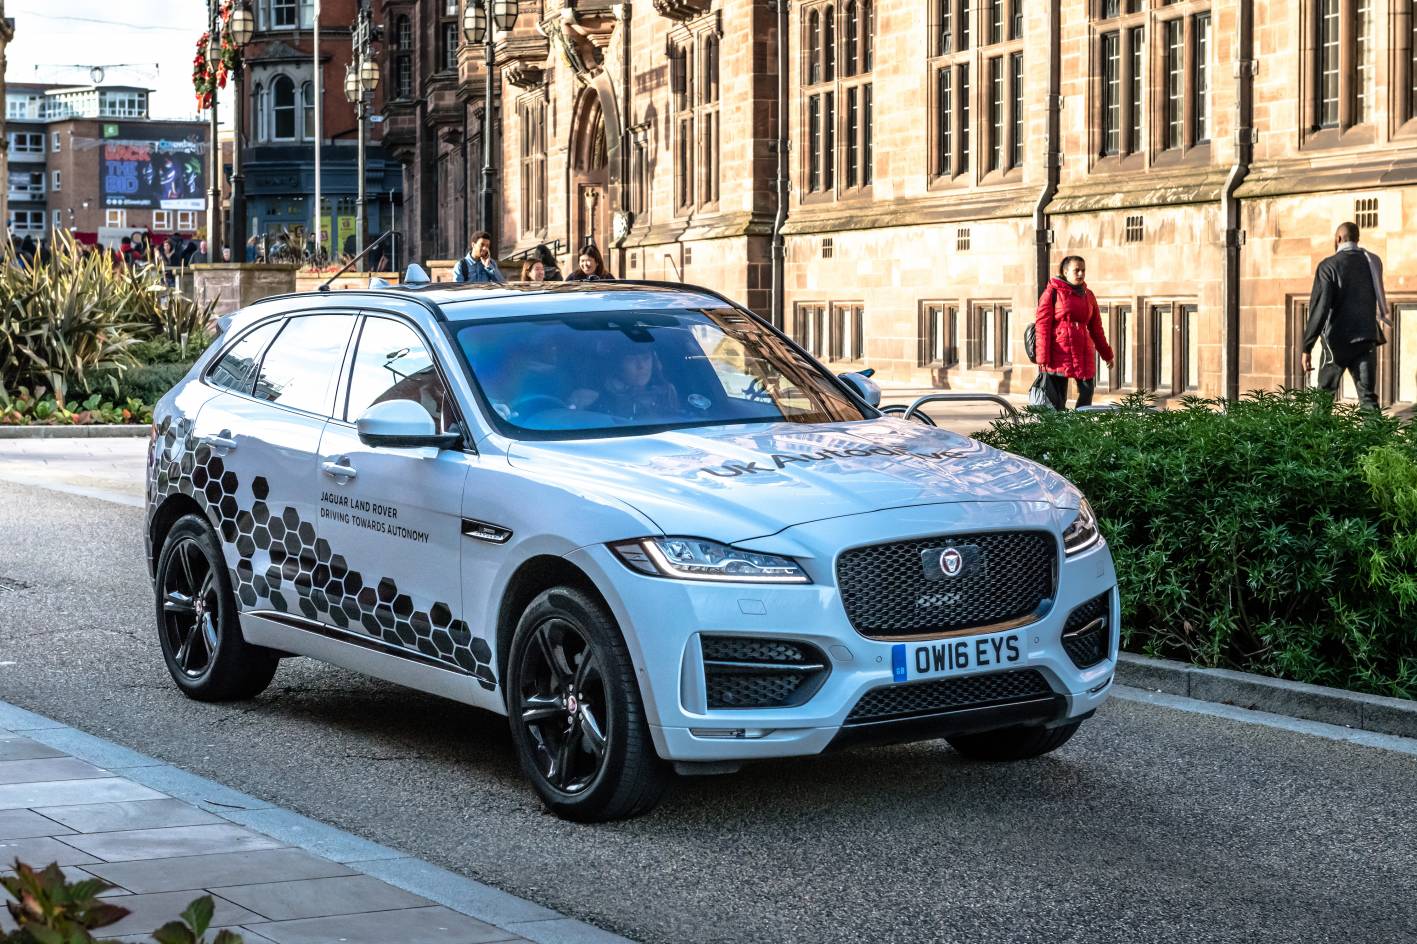 Jaguar Land Rover begins testing autonomous vehicles in the UK